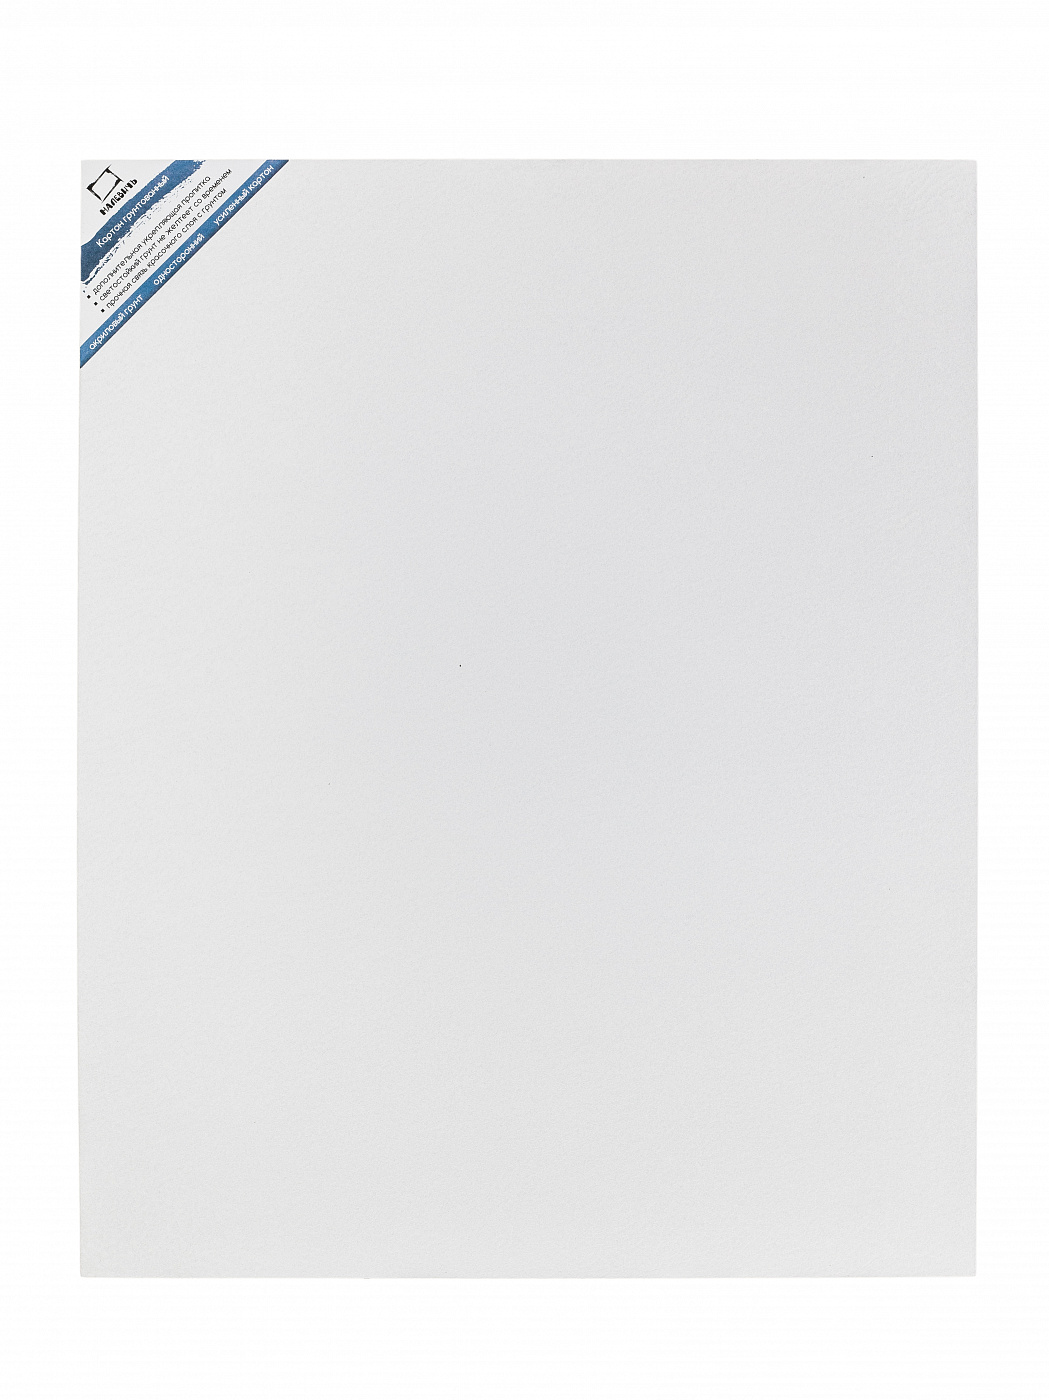 Картон грунтованный односторонний Малевичъ 40х50 см картон белый а4 calligrata 40 листов 190 г м2 немелованный односторонний